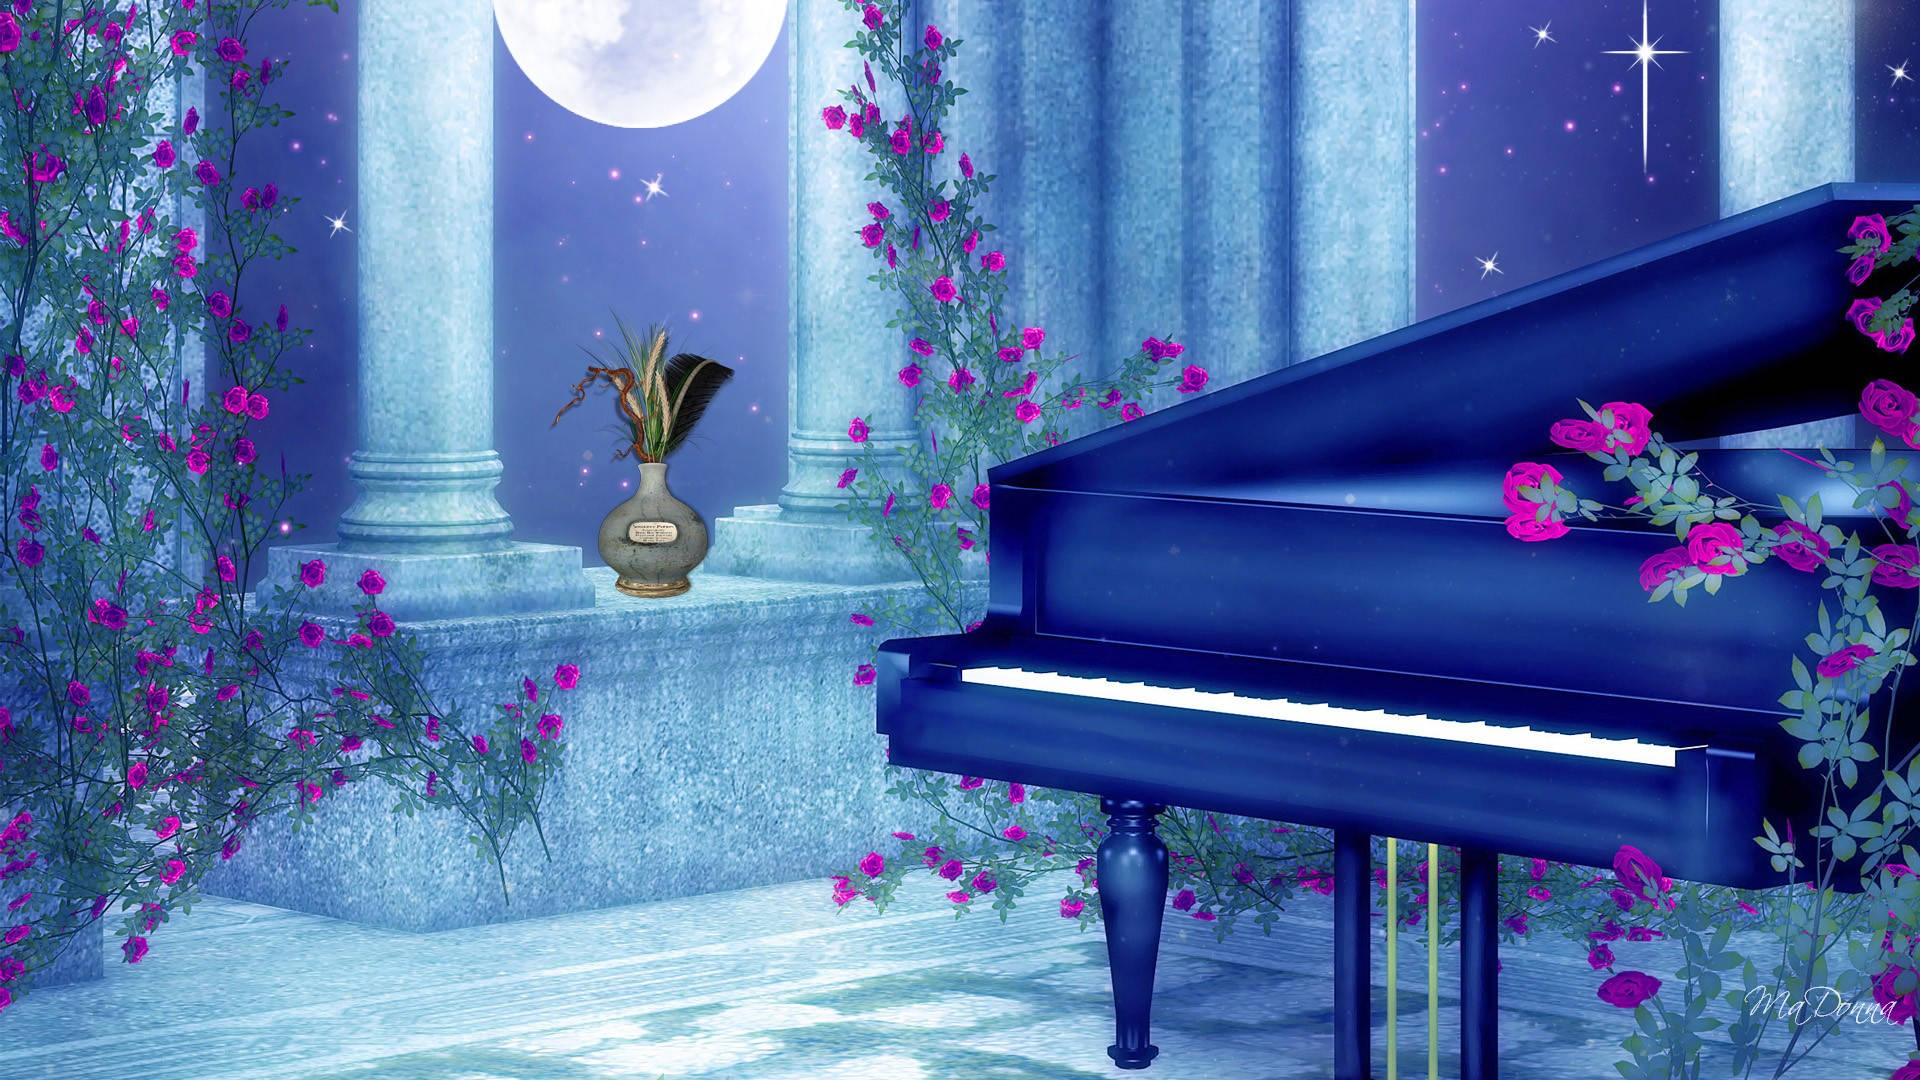 Grand Piano In Moonlight